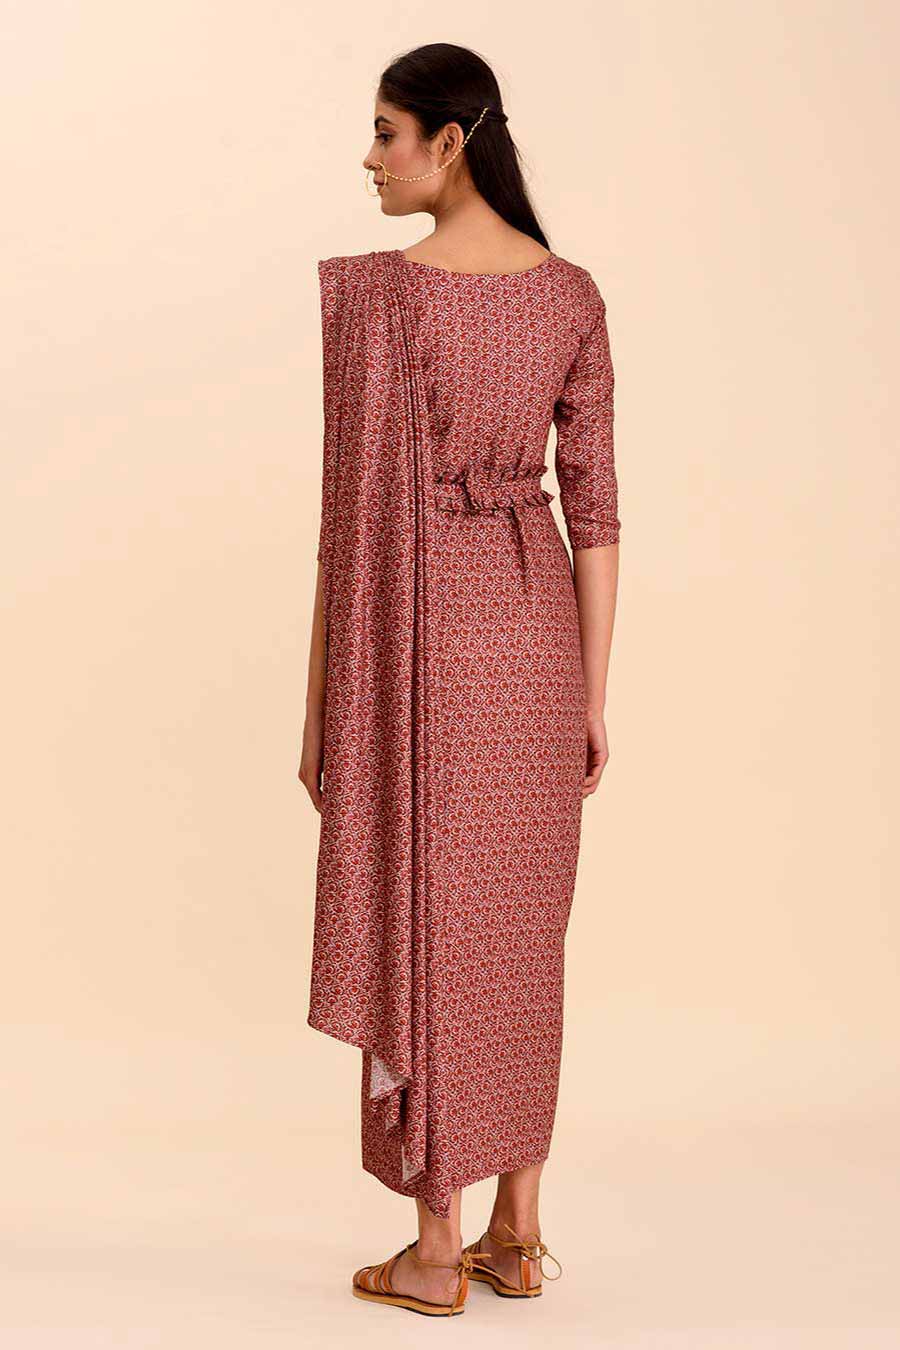 DHRUVA - Pre Draped Printed Saree Dress